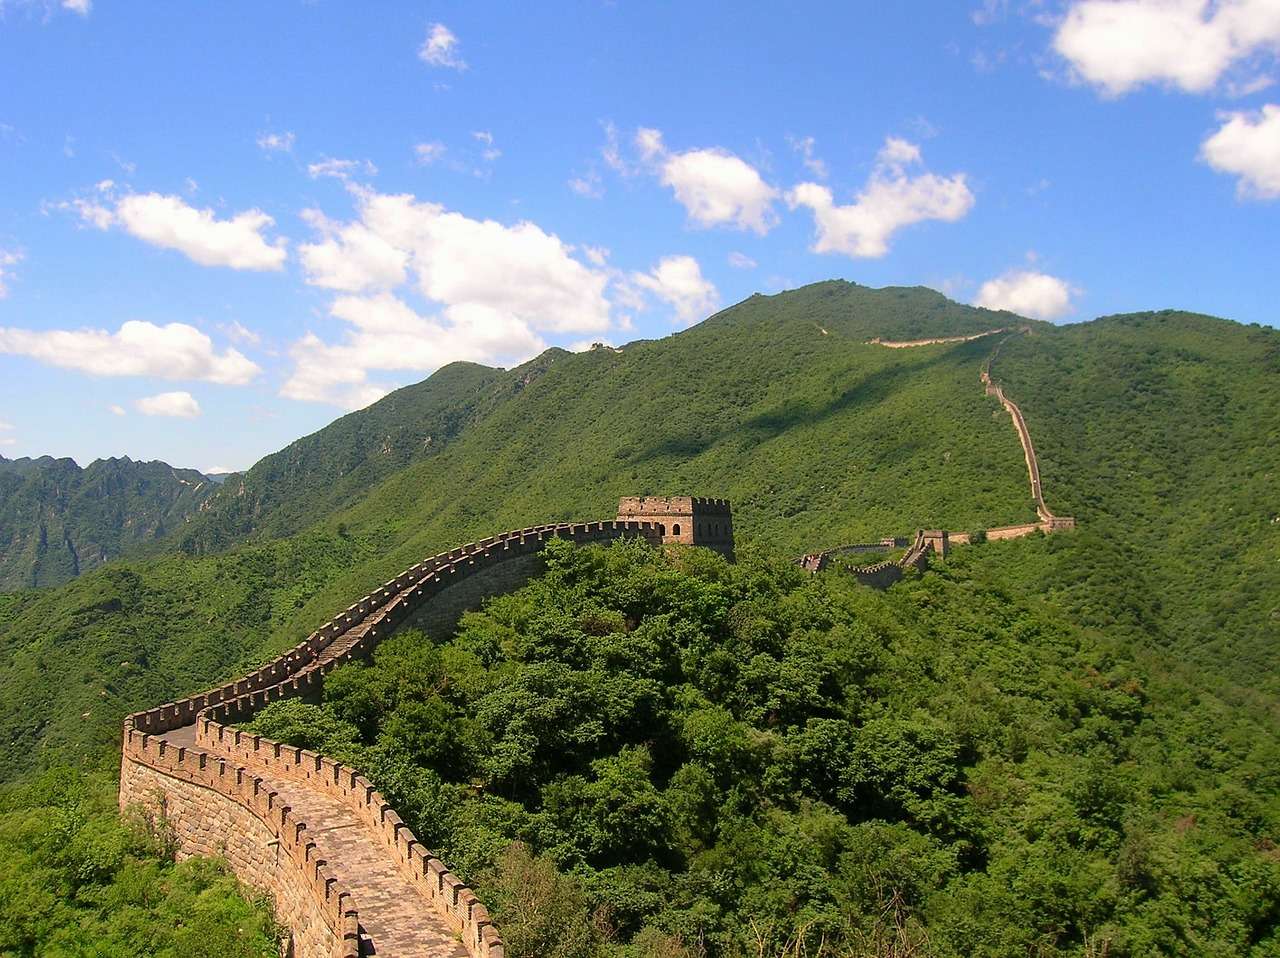 Muur Van China legpuzzel online